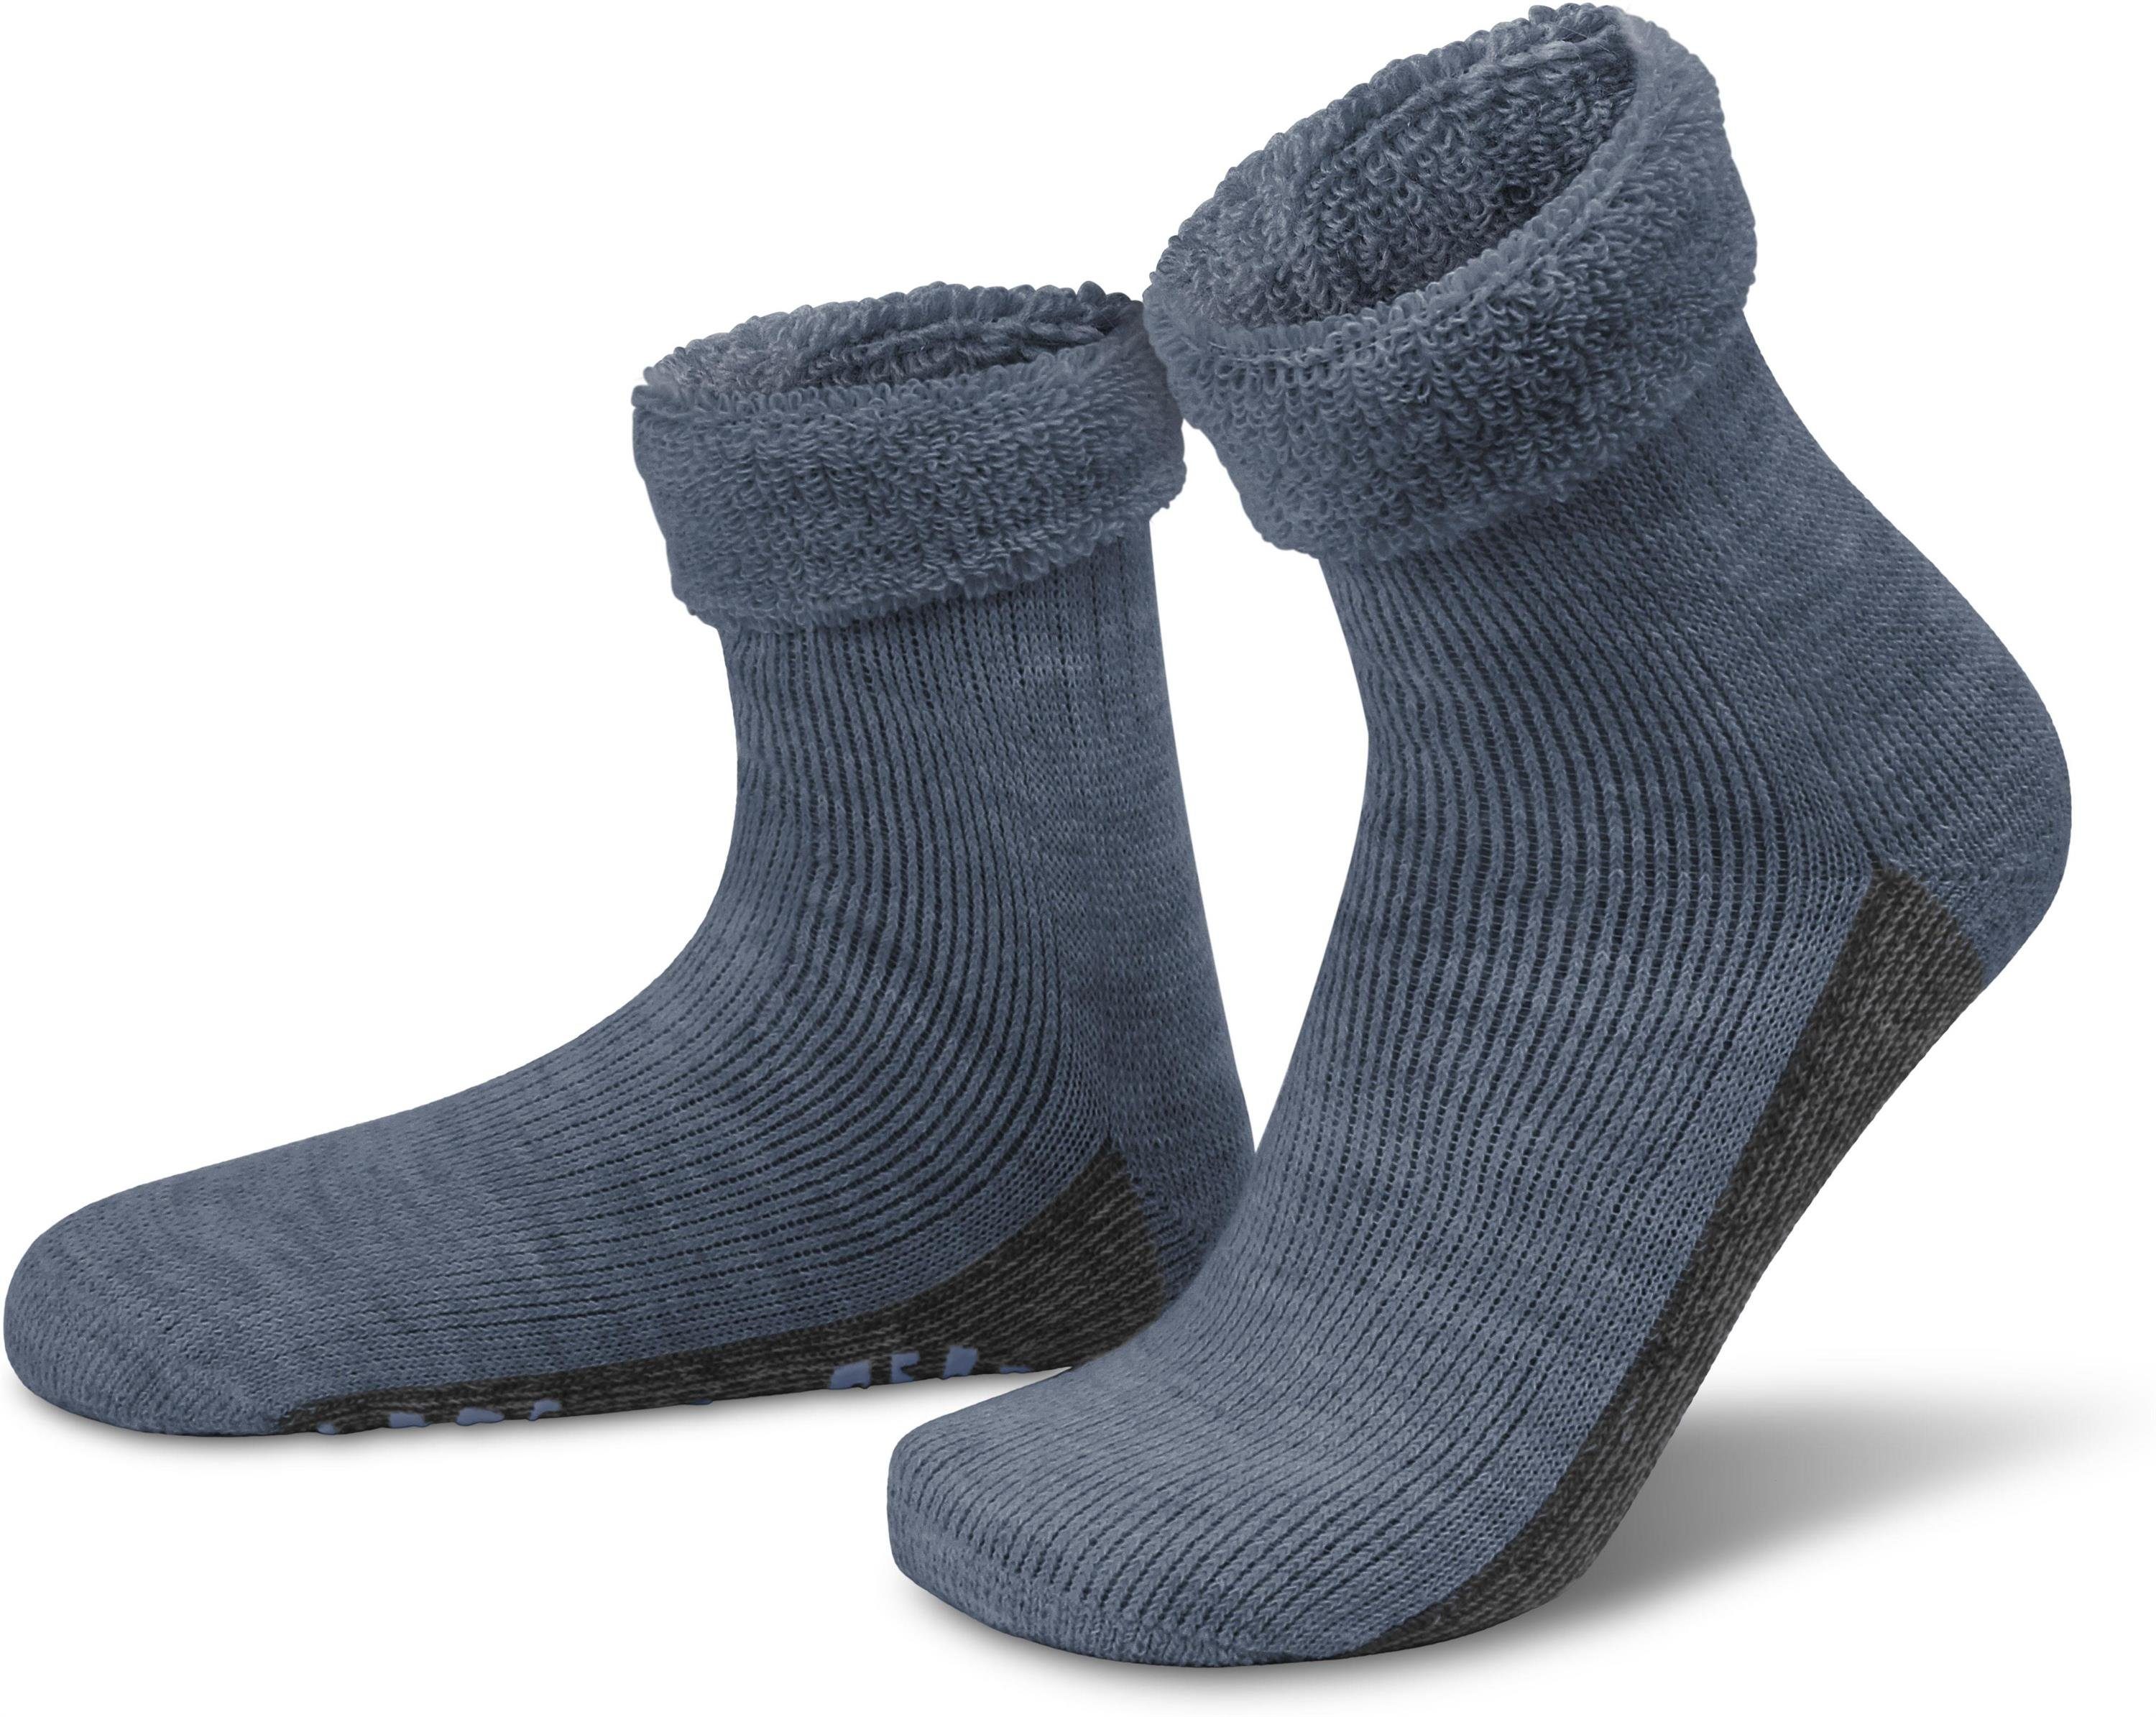 normani ABS-Socken Alpaka-Wollsocken mit ABS-Druck (1 Paar) hochwertige Alpaka-Wolle Jeans